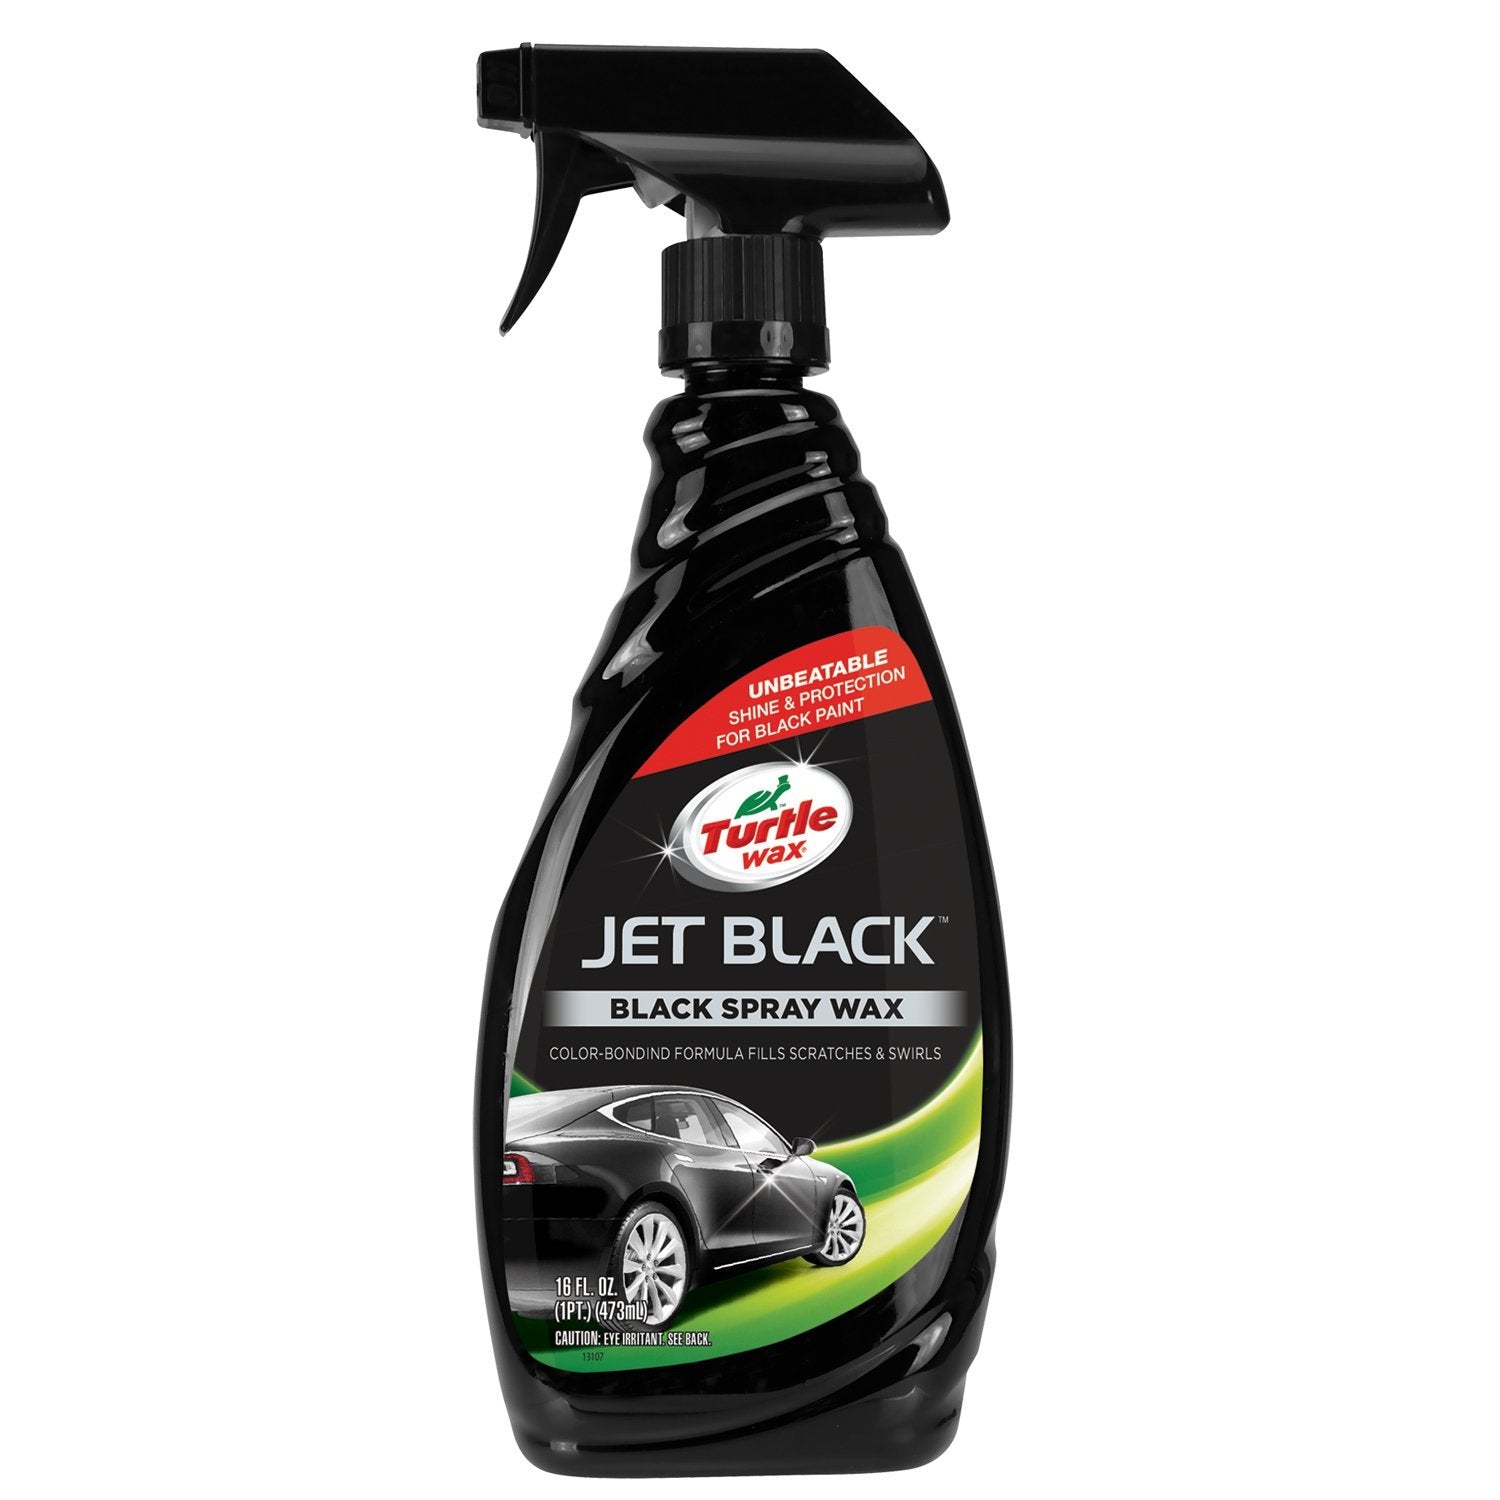 Turtle Jet Black Spray Wax